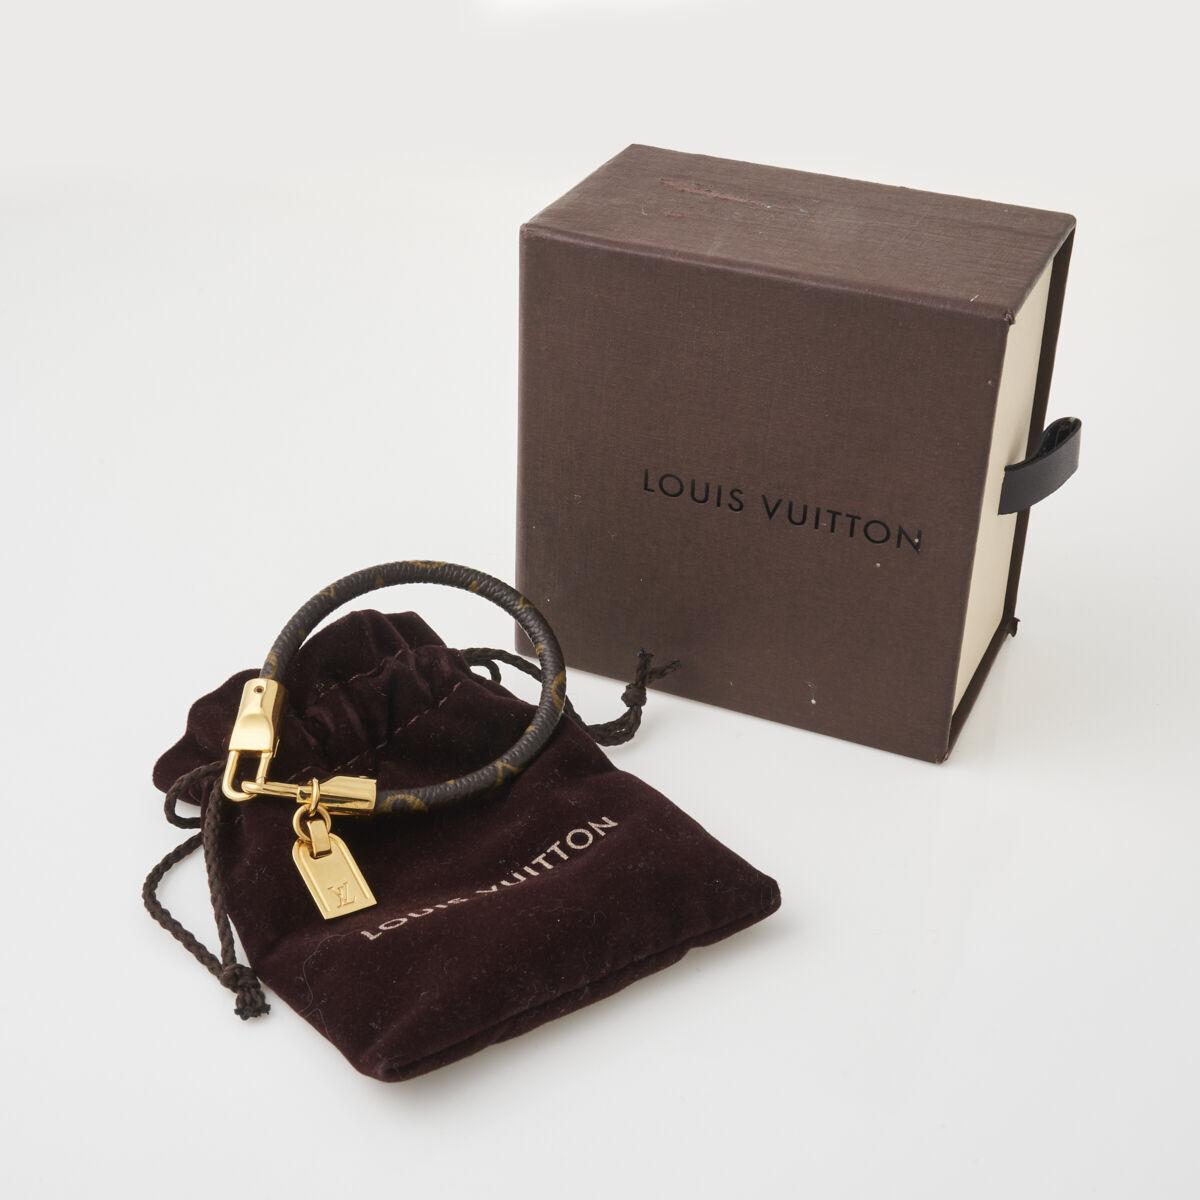 Louis Vuitton Monogram Luggage Tag Charm Bracelet with Box